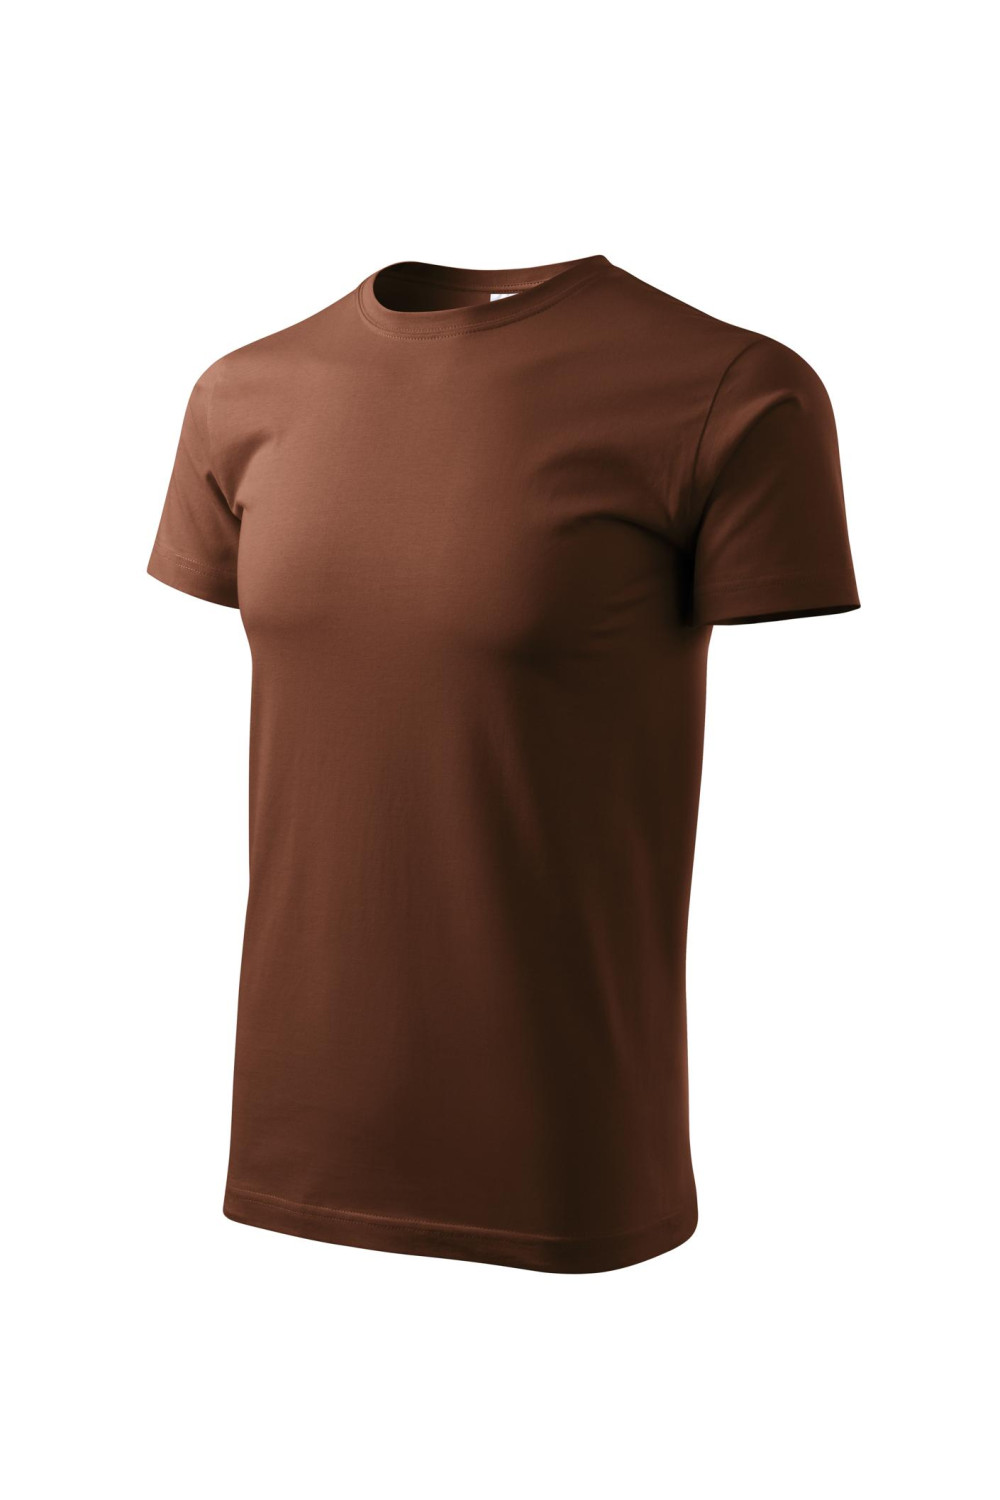 Koszulka męska 100% bawełna BASIC 129  kolor czekoladowy